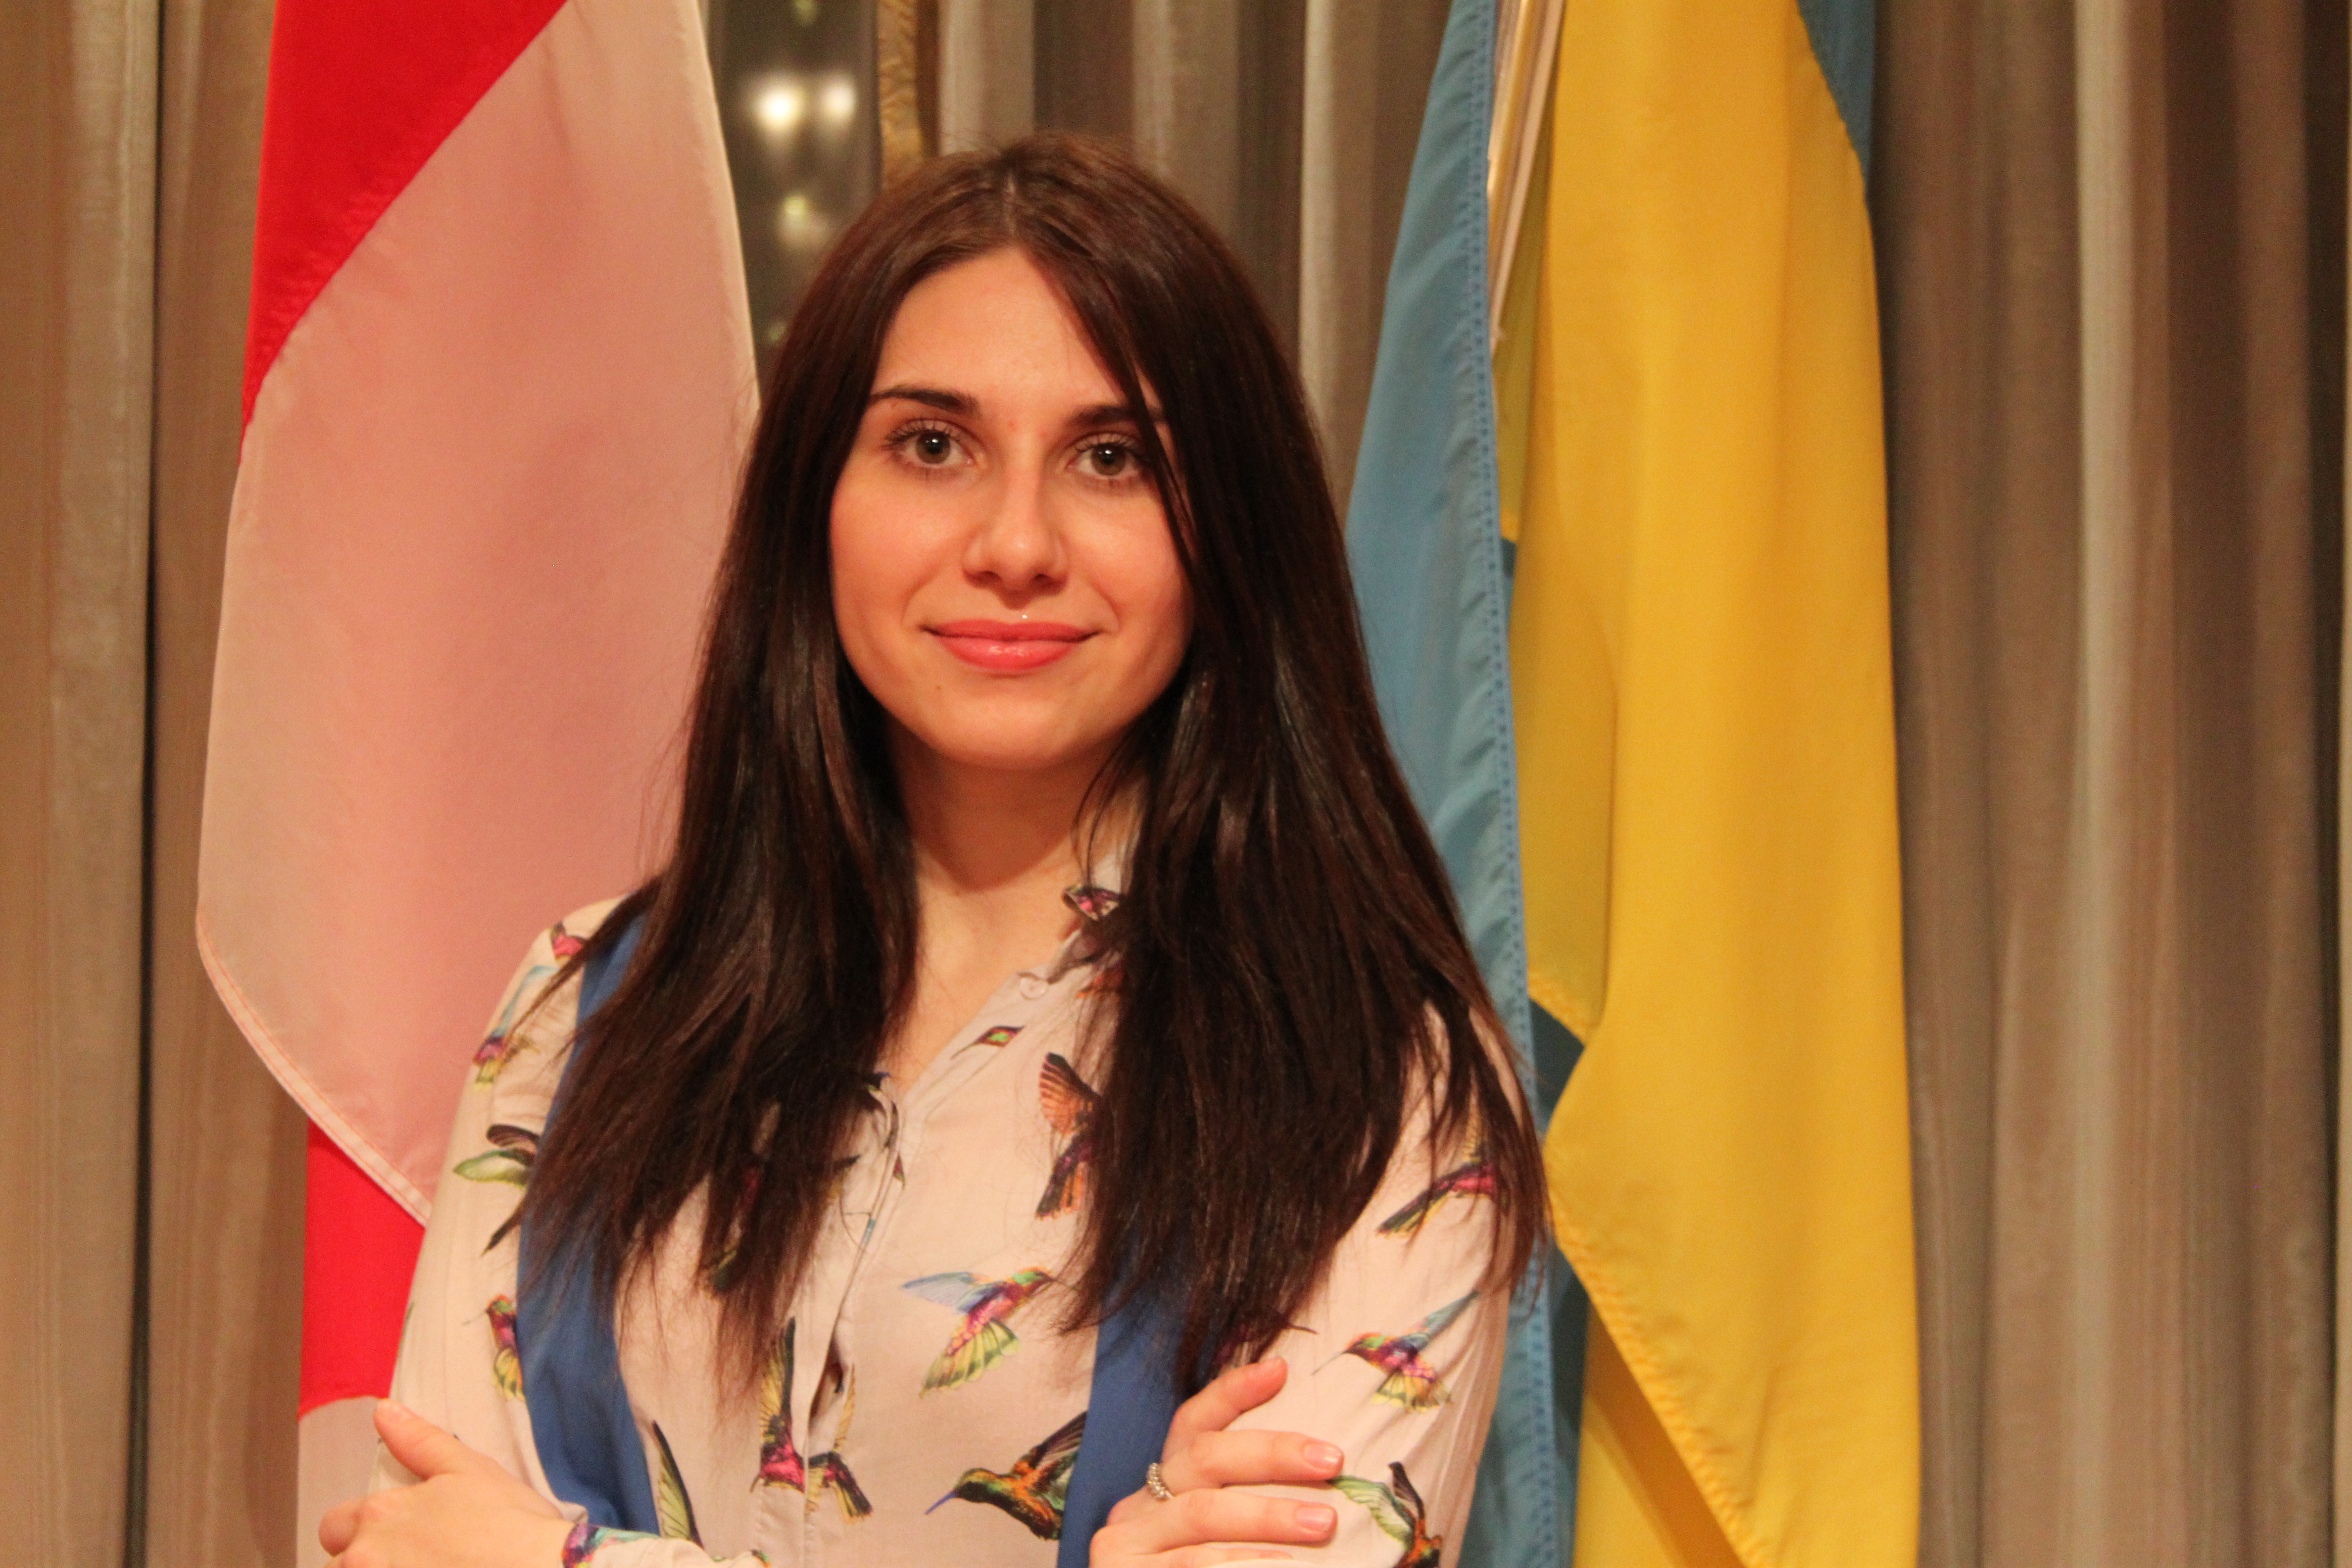 Oksana Matiyash, intern